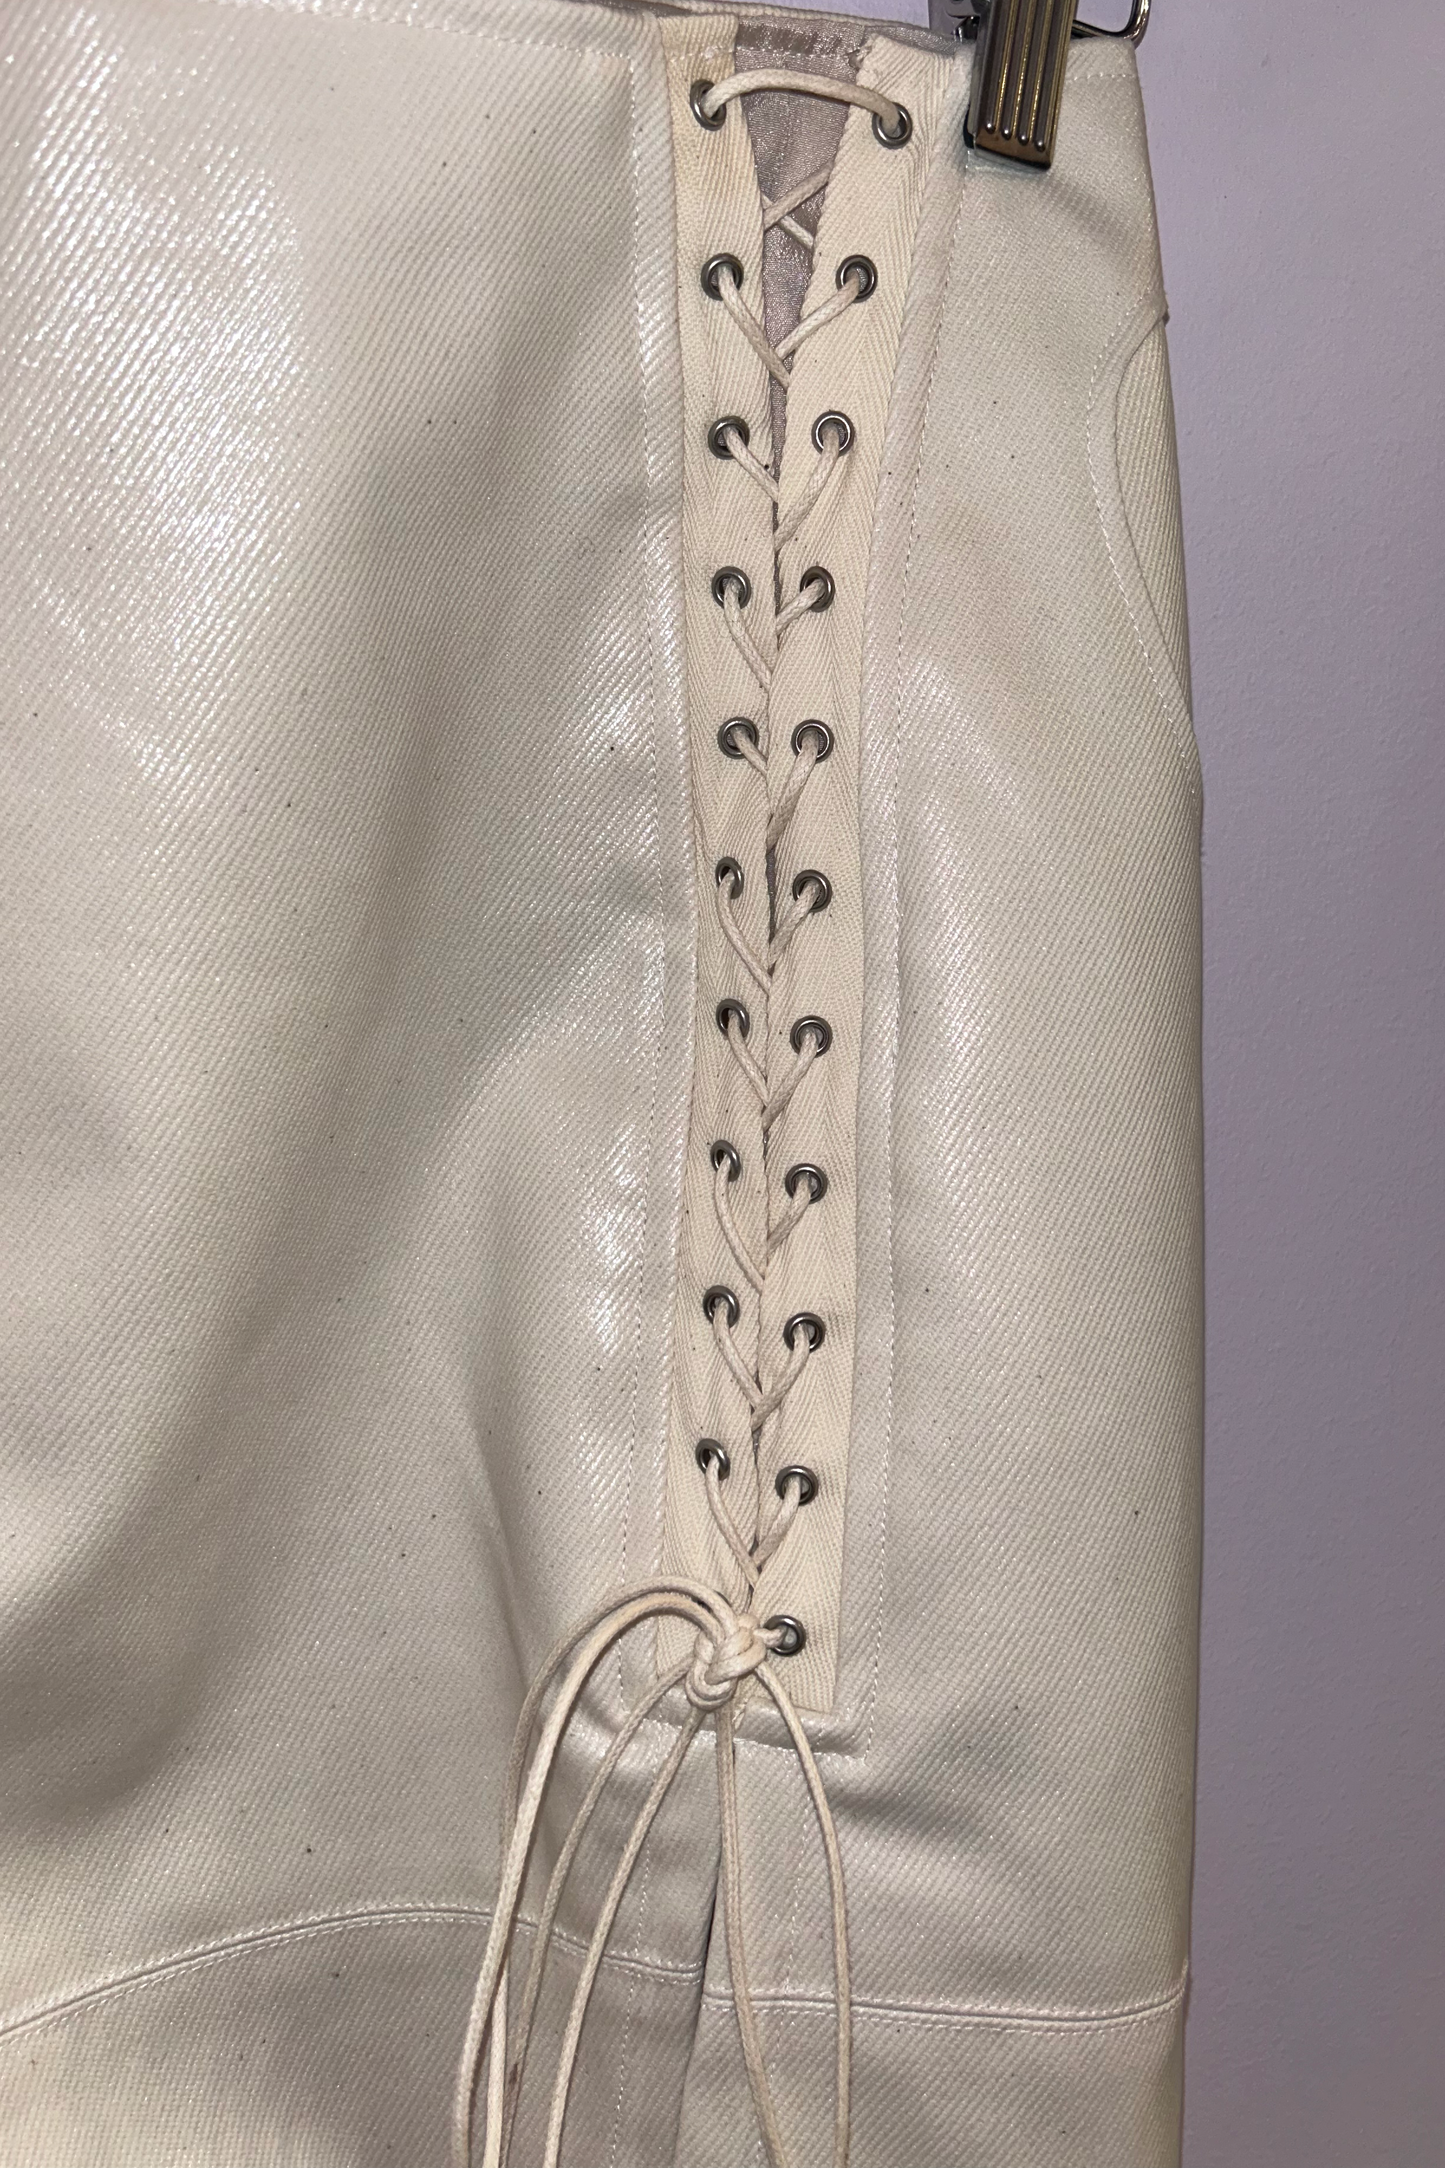 Marco Rambaldi - Coated Lace-Up Midi Skirt: White